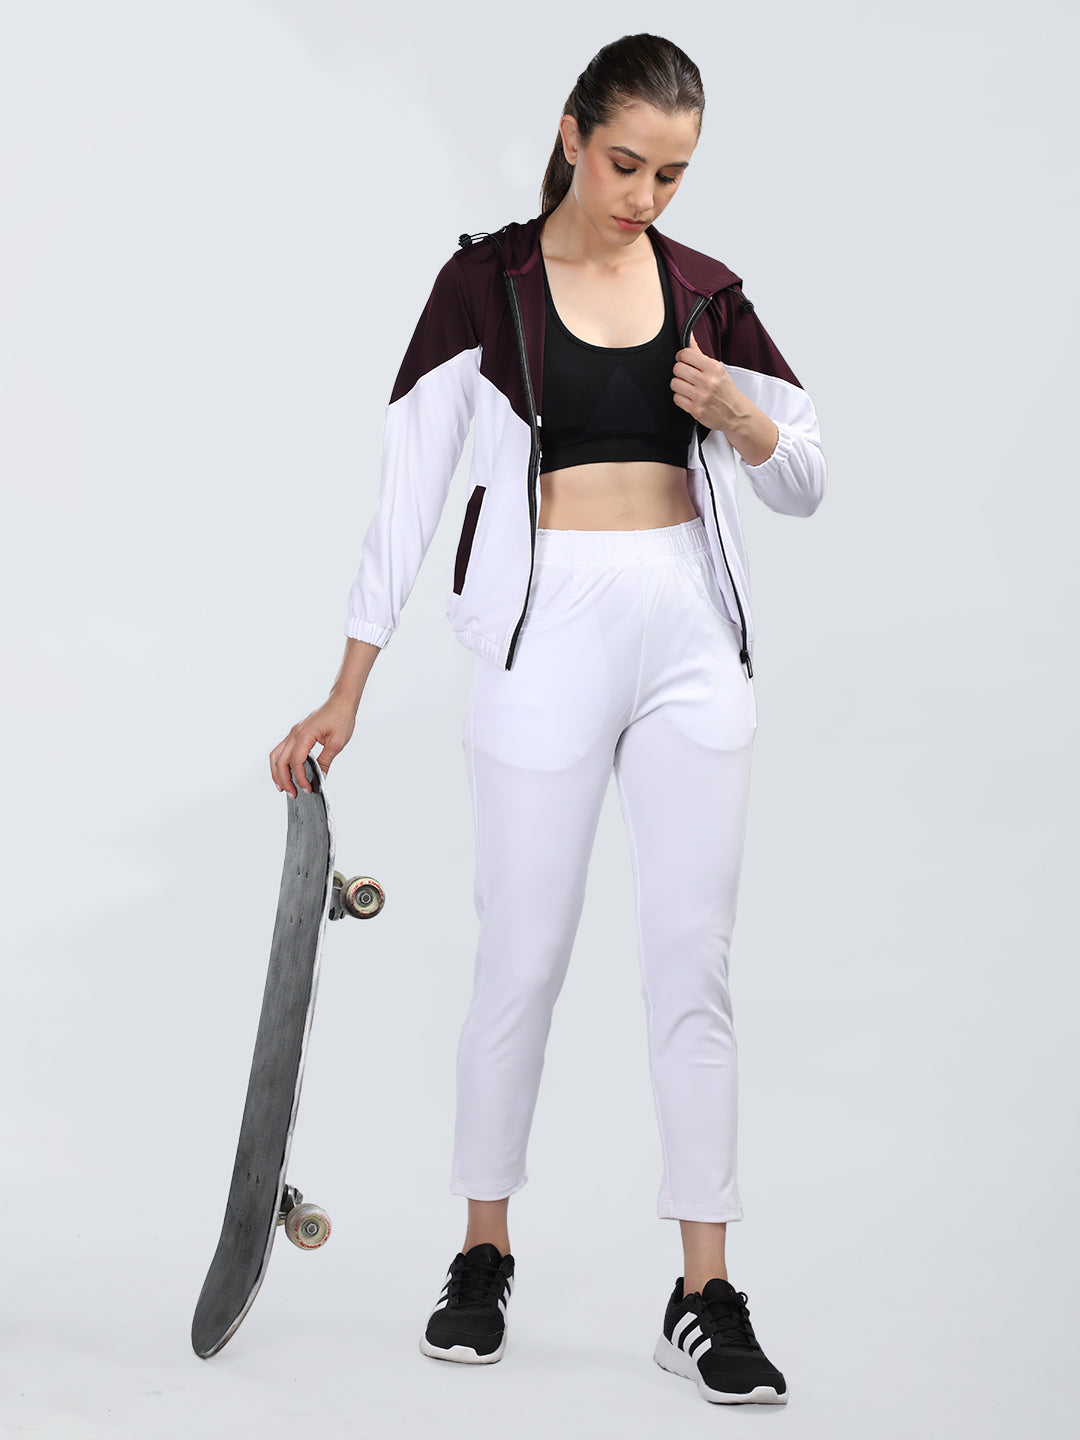 CHKOKKO Women Sports Zipper Running Winter Windcheater Track Suit